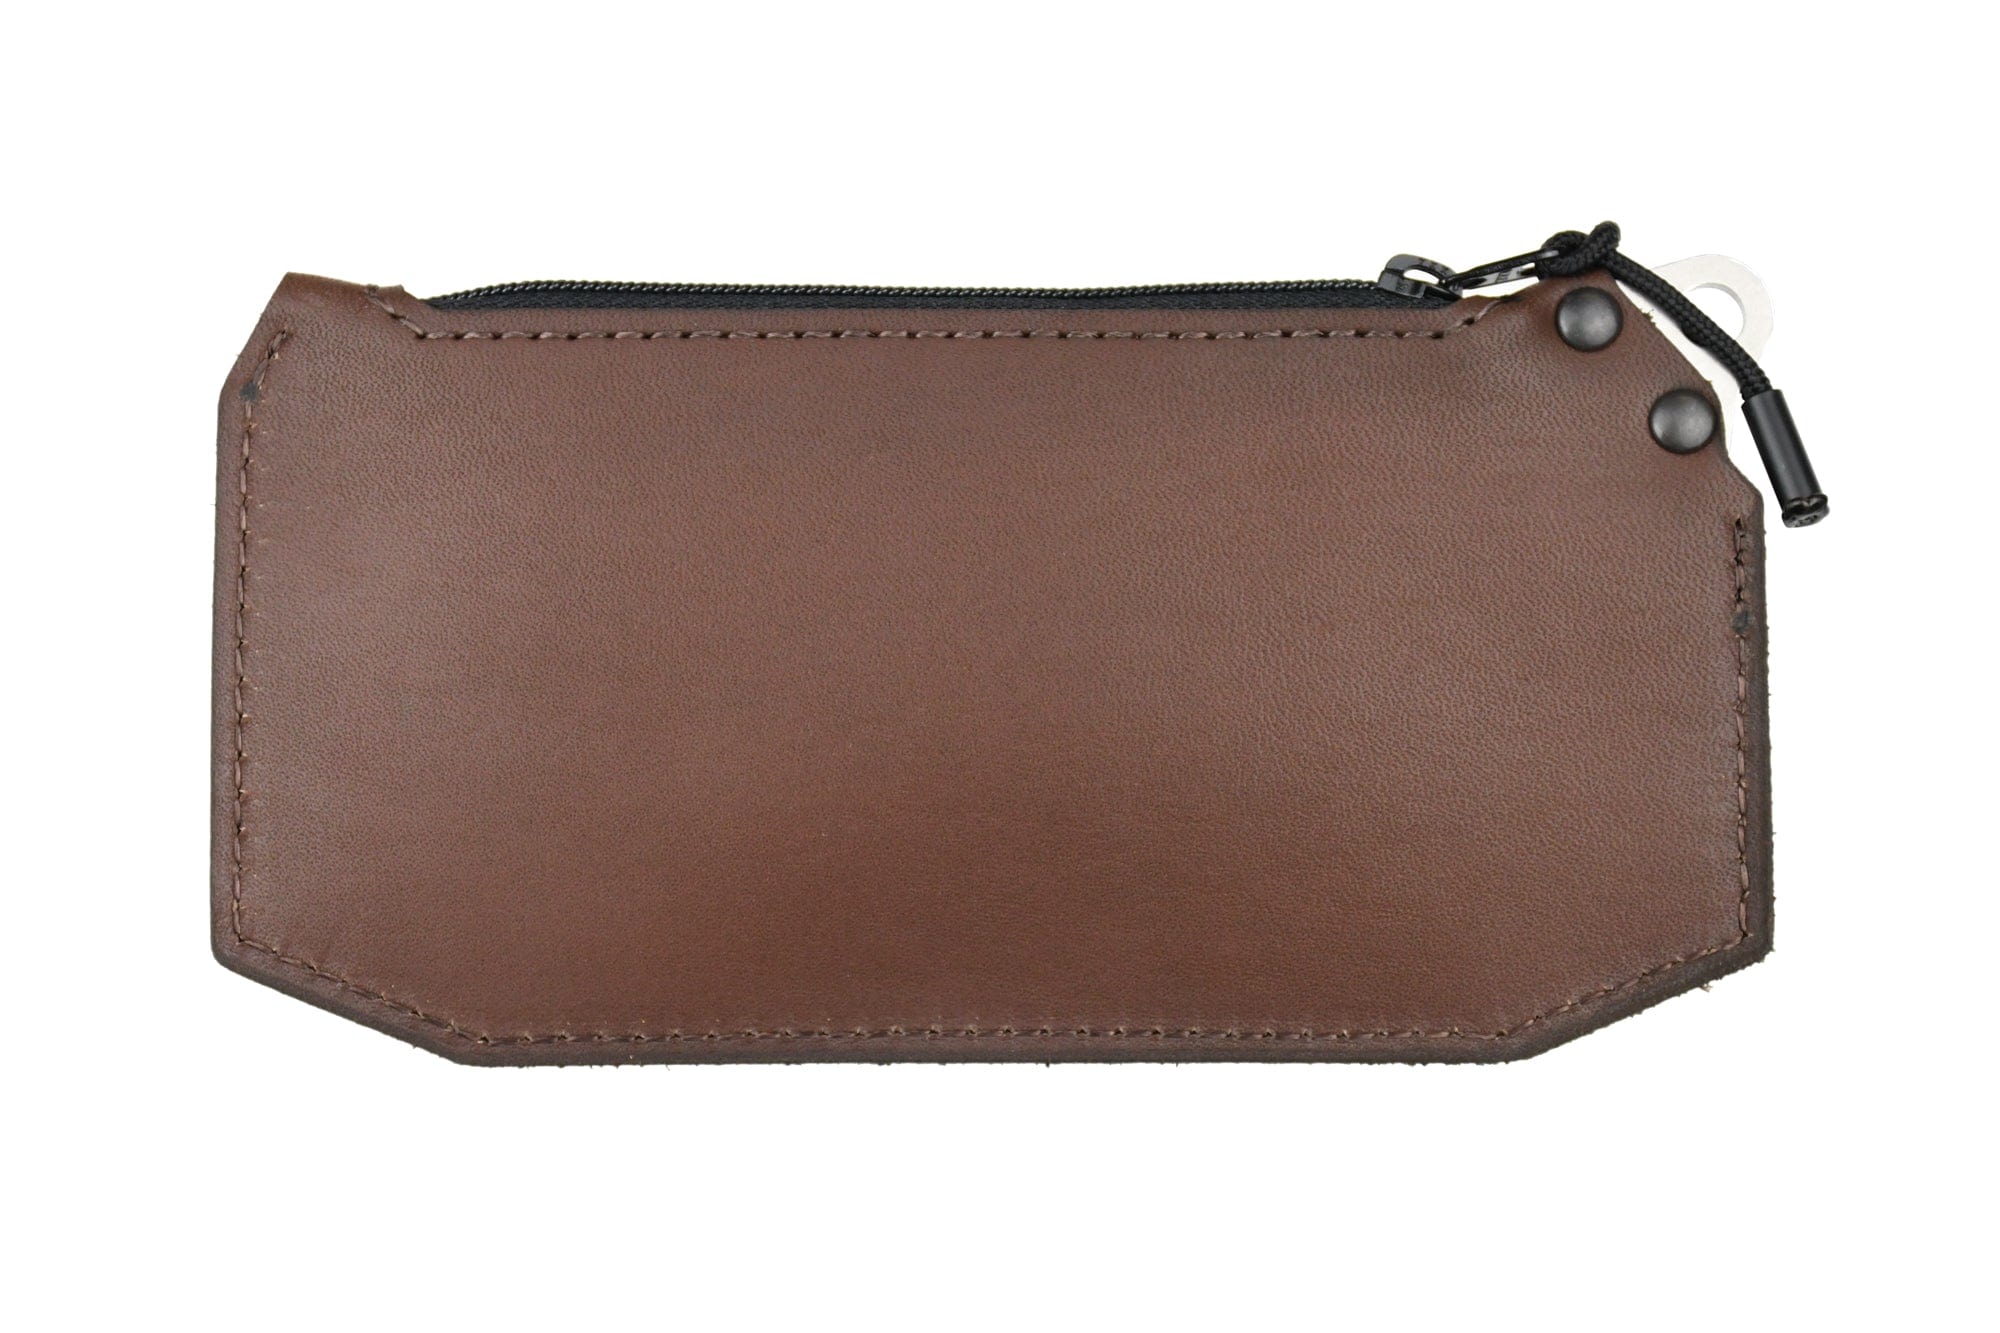 Trayvax Enterprises Wallet Brown Renegade Zipper Wallet